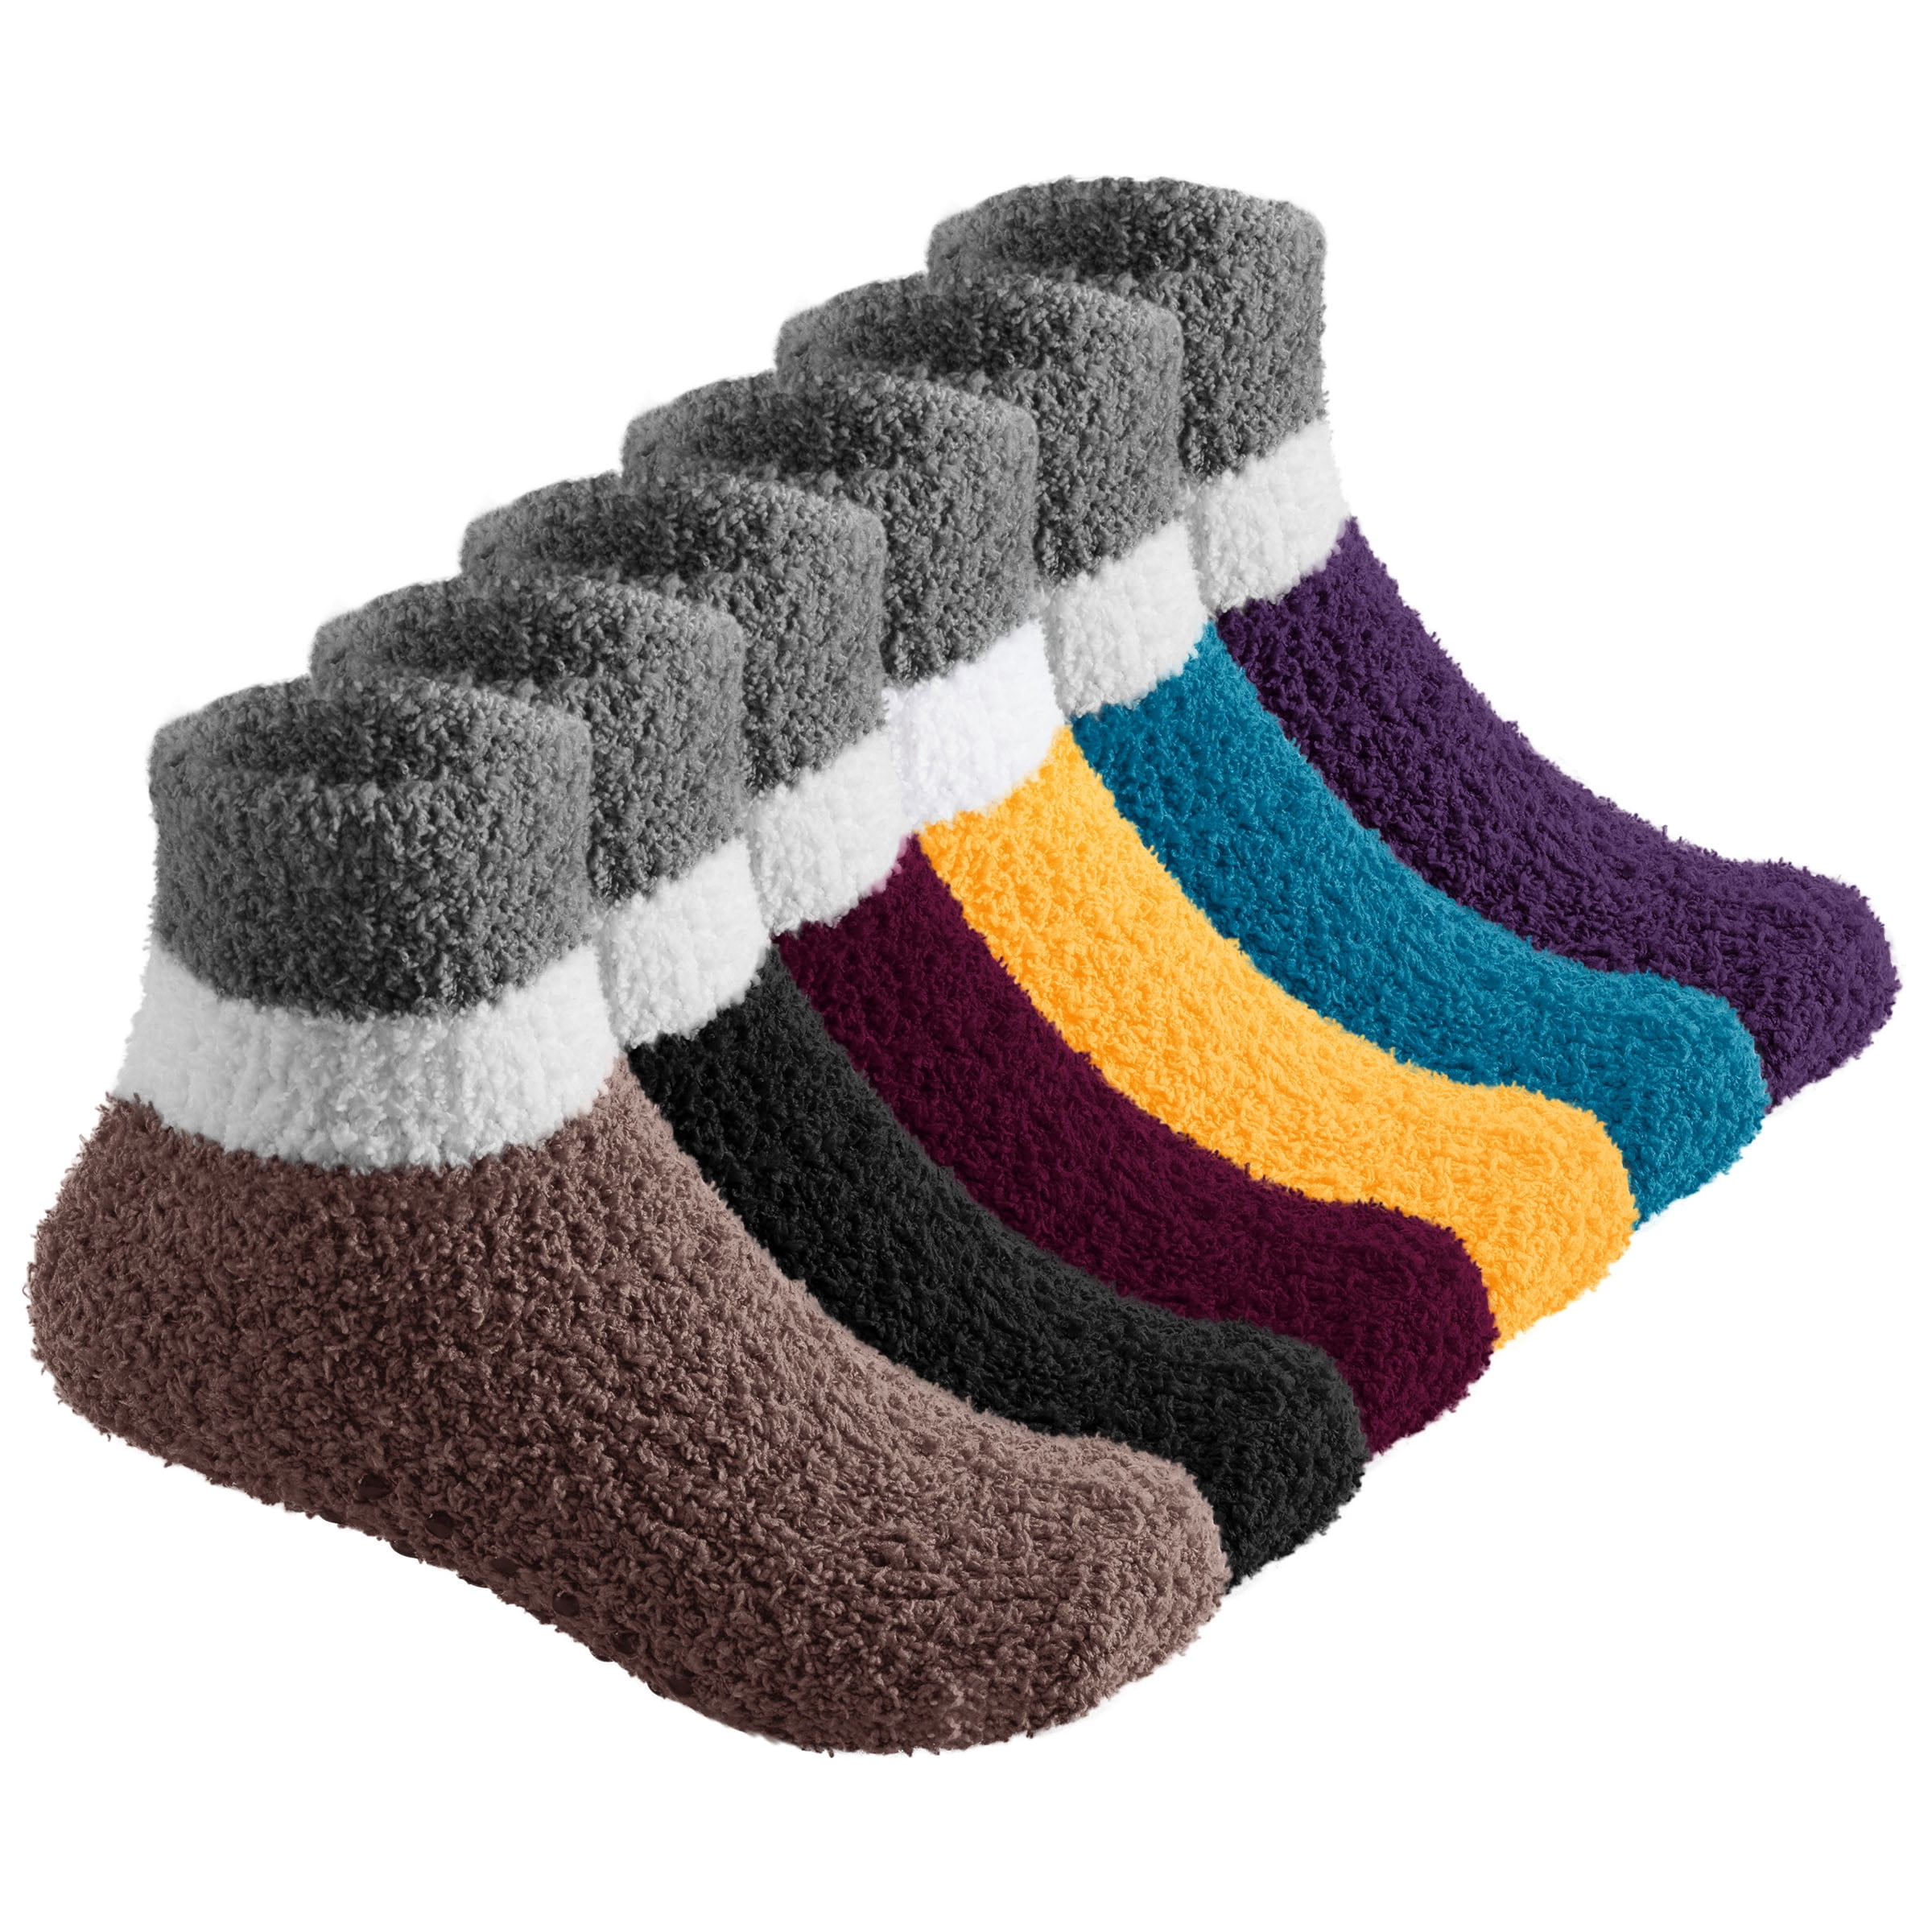 Boys Warm Cotton Socks Kids Winter Thick Crew Socks Thermal Cozy Socks for Boys 6 Pack